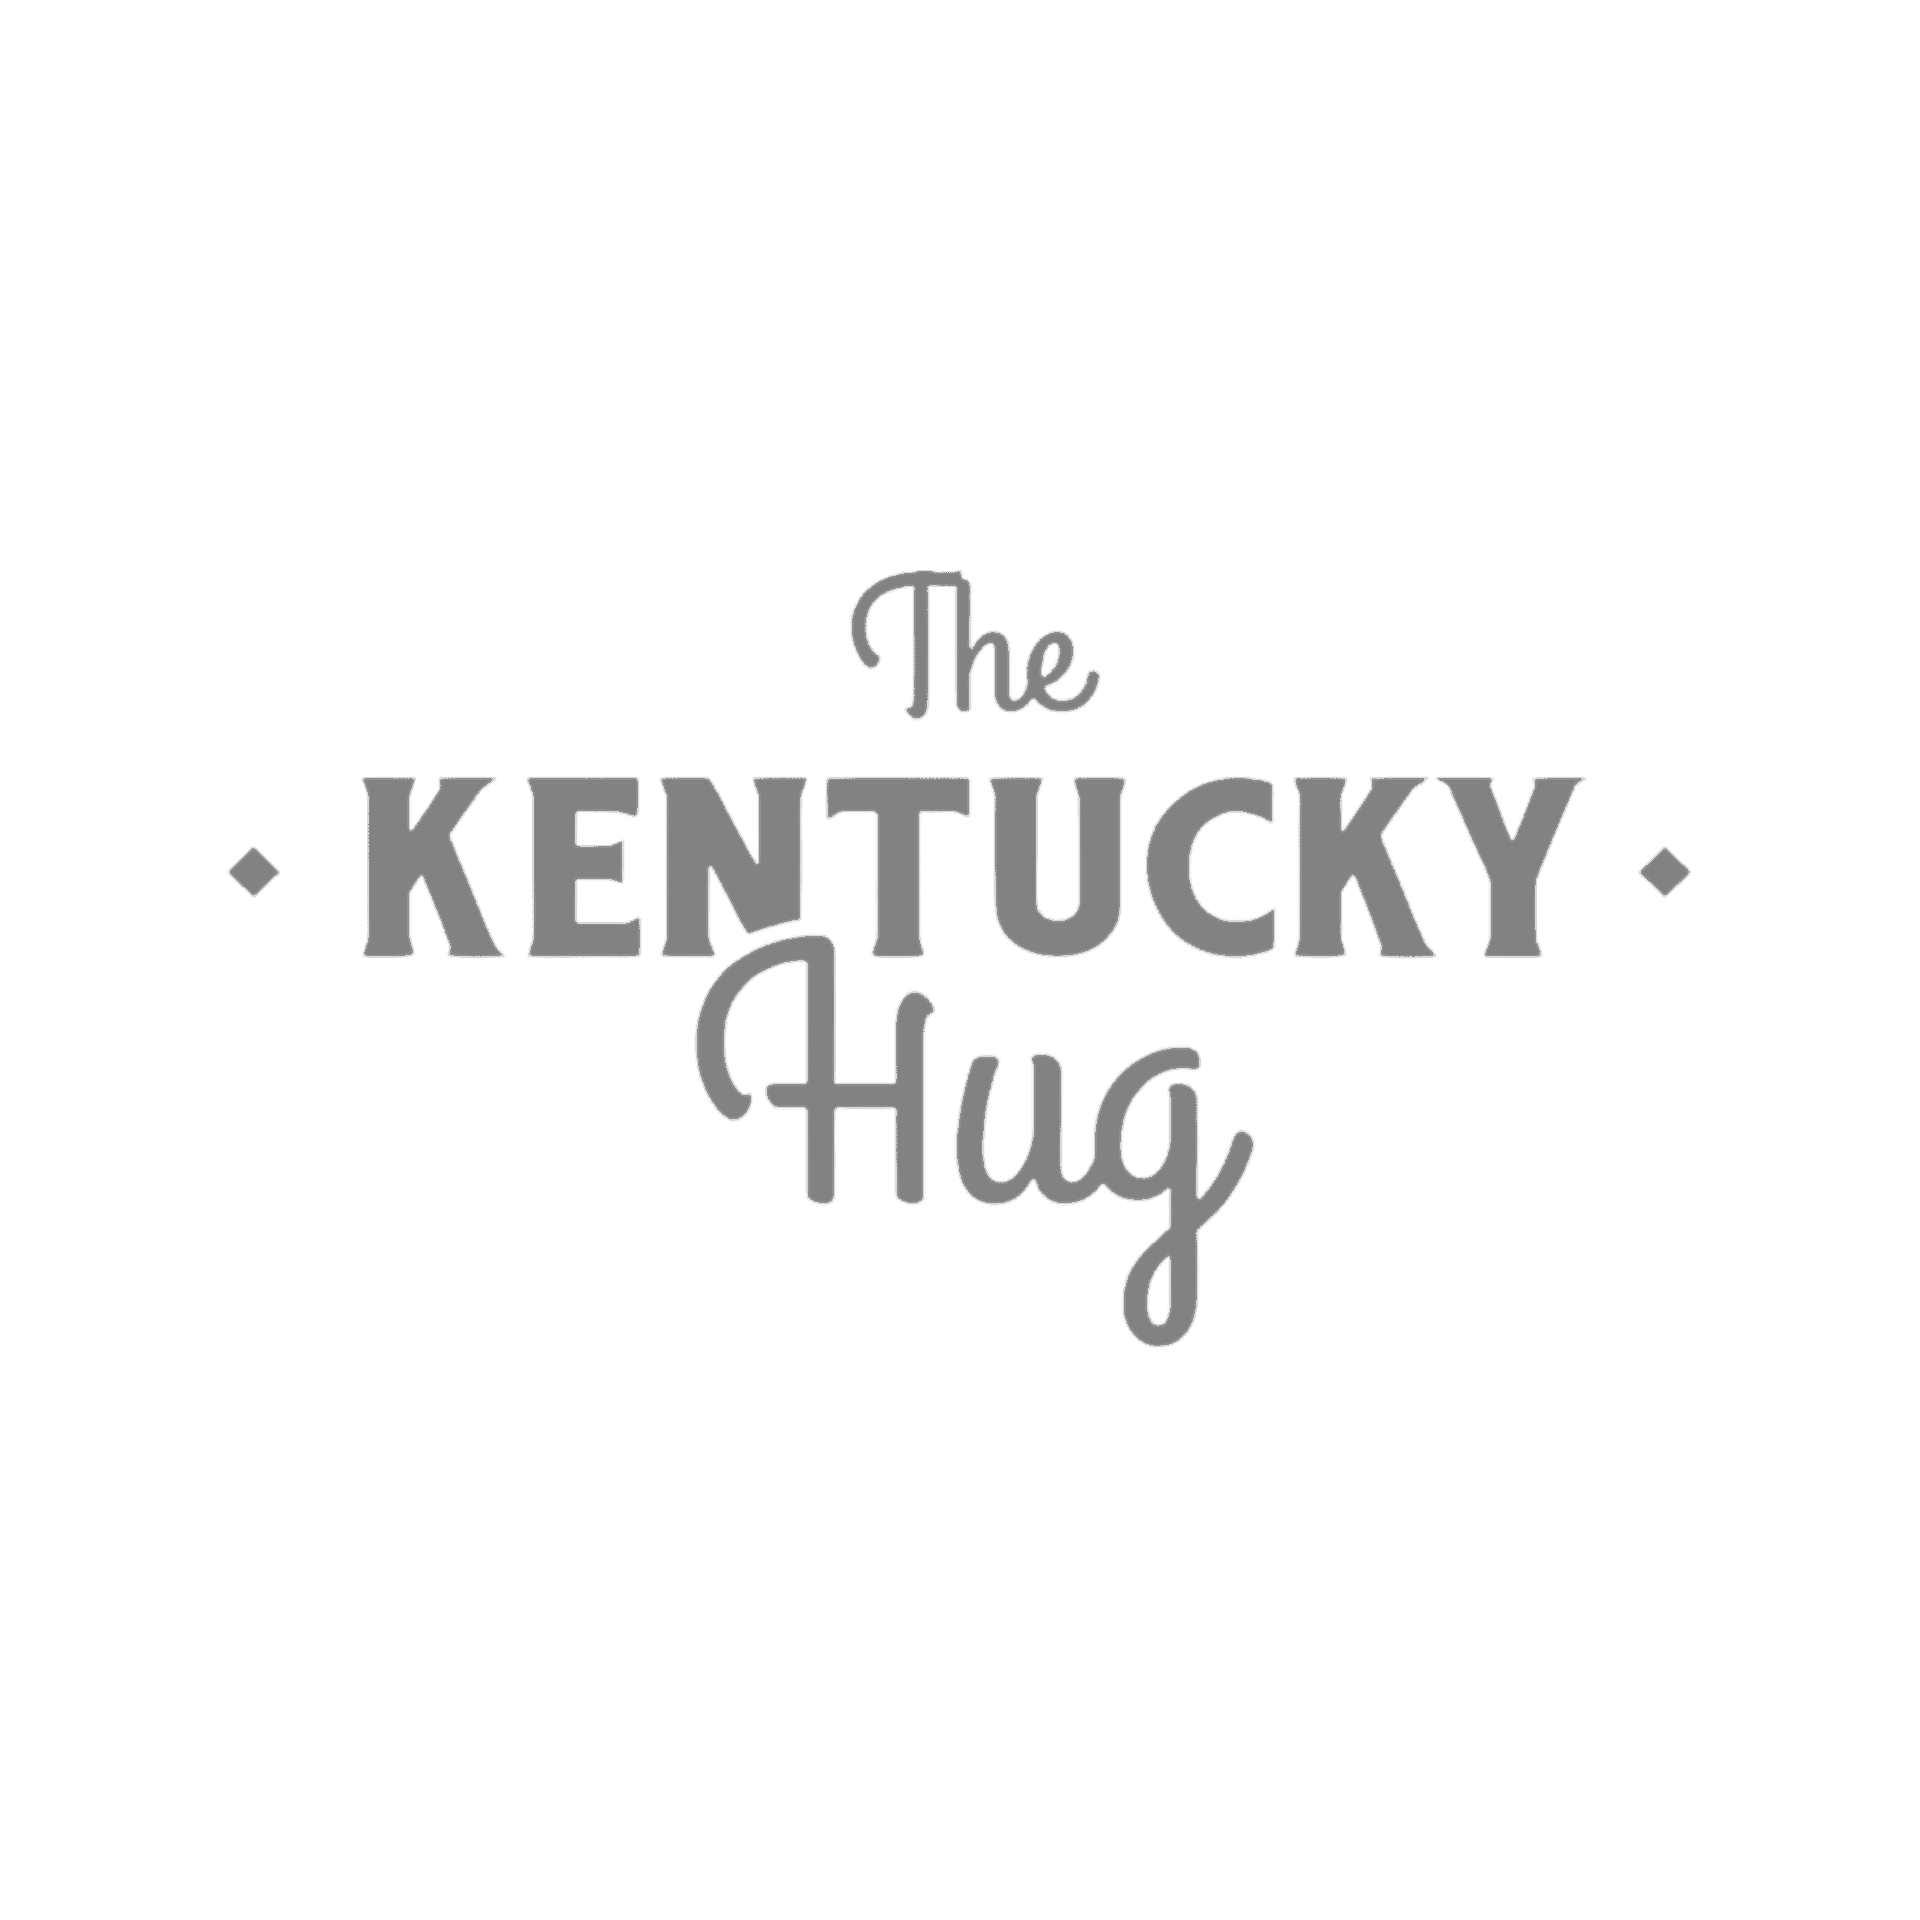 The Kentucky Hug